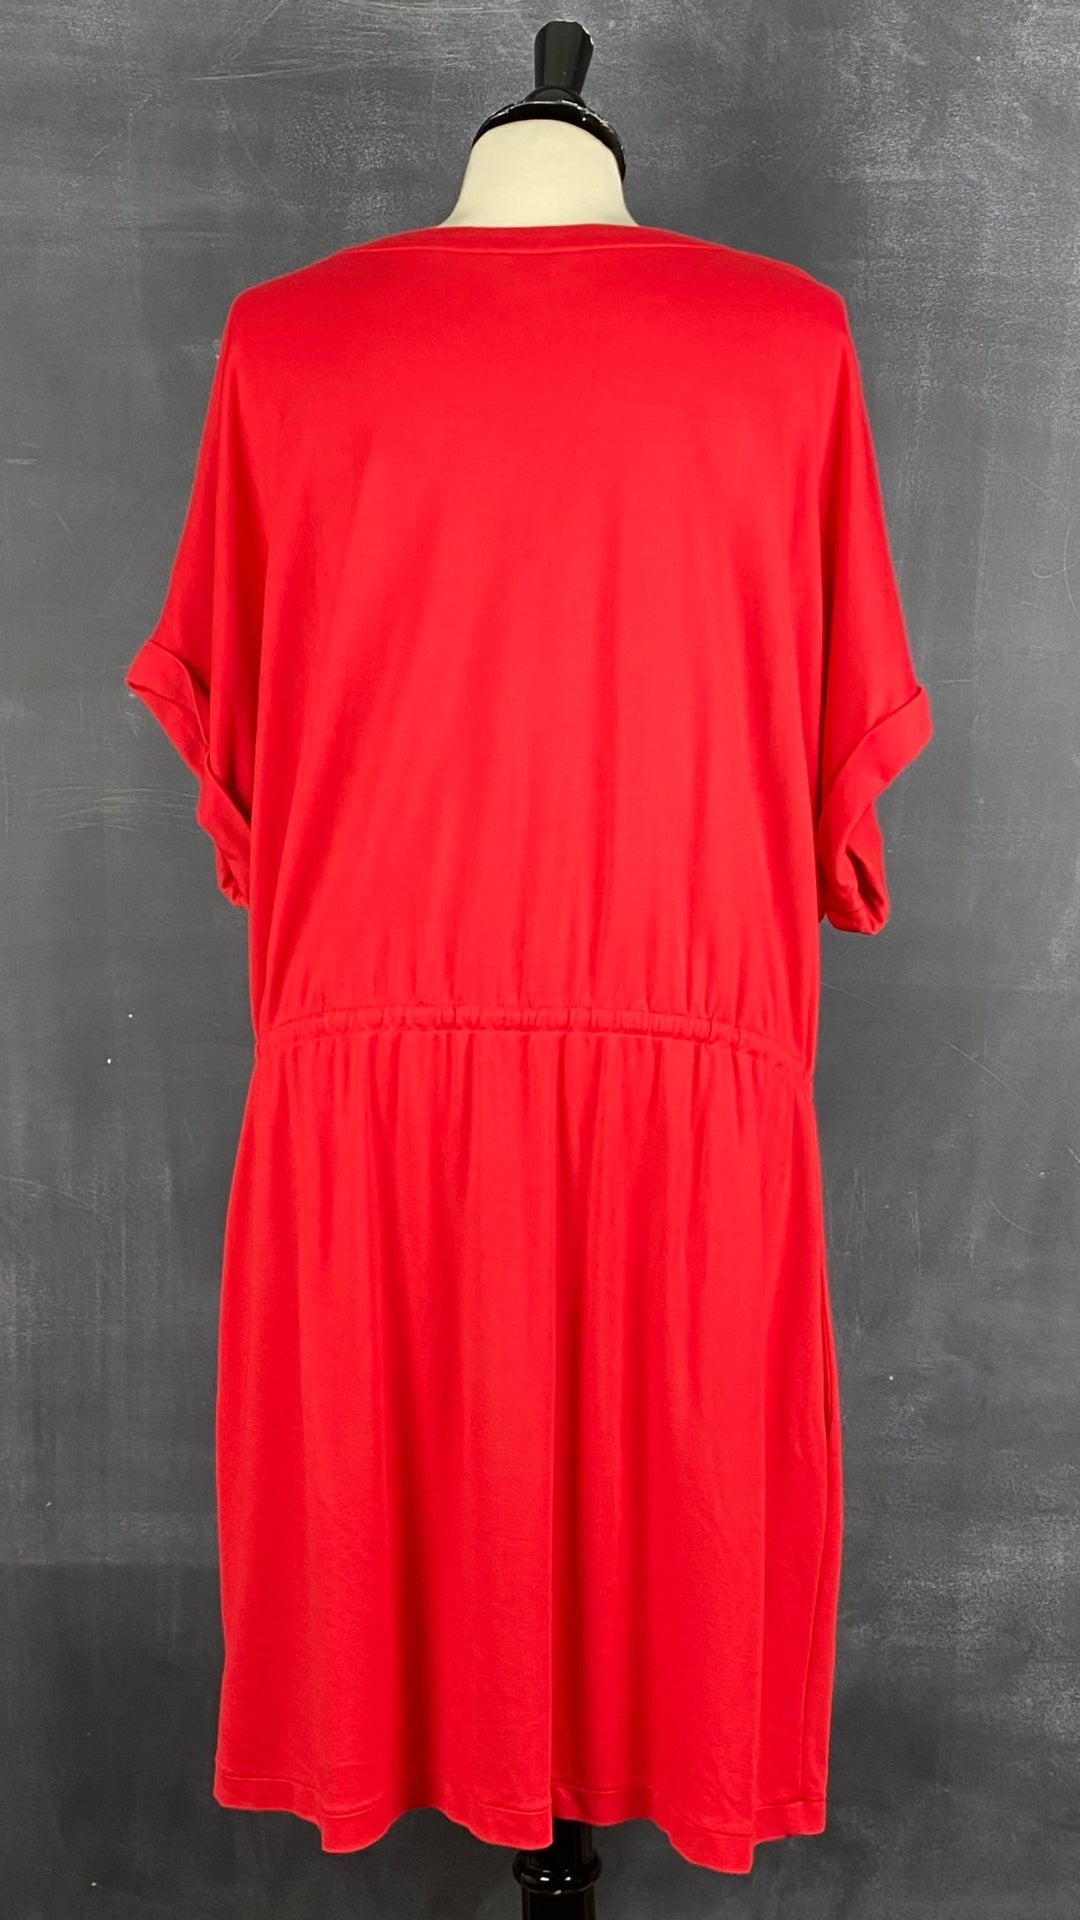 Robe en jersey extensible rouge avec poches Rachel Rachel Roy, taille xxl. Vue de dos.